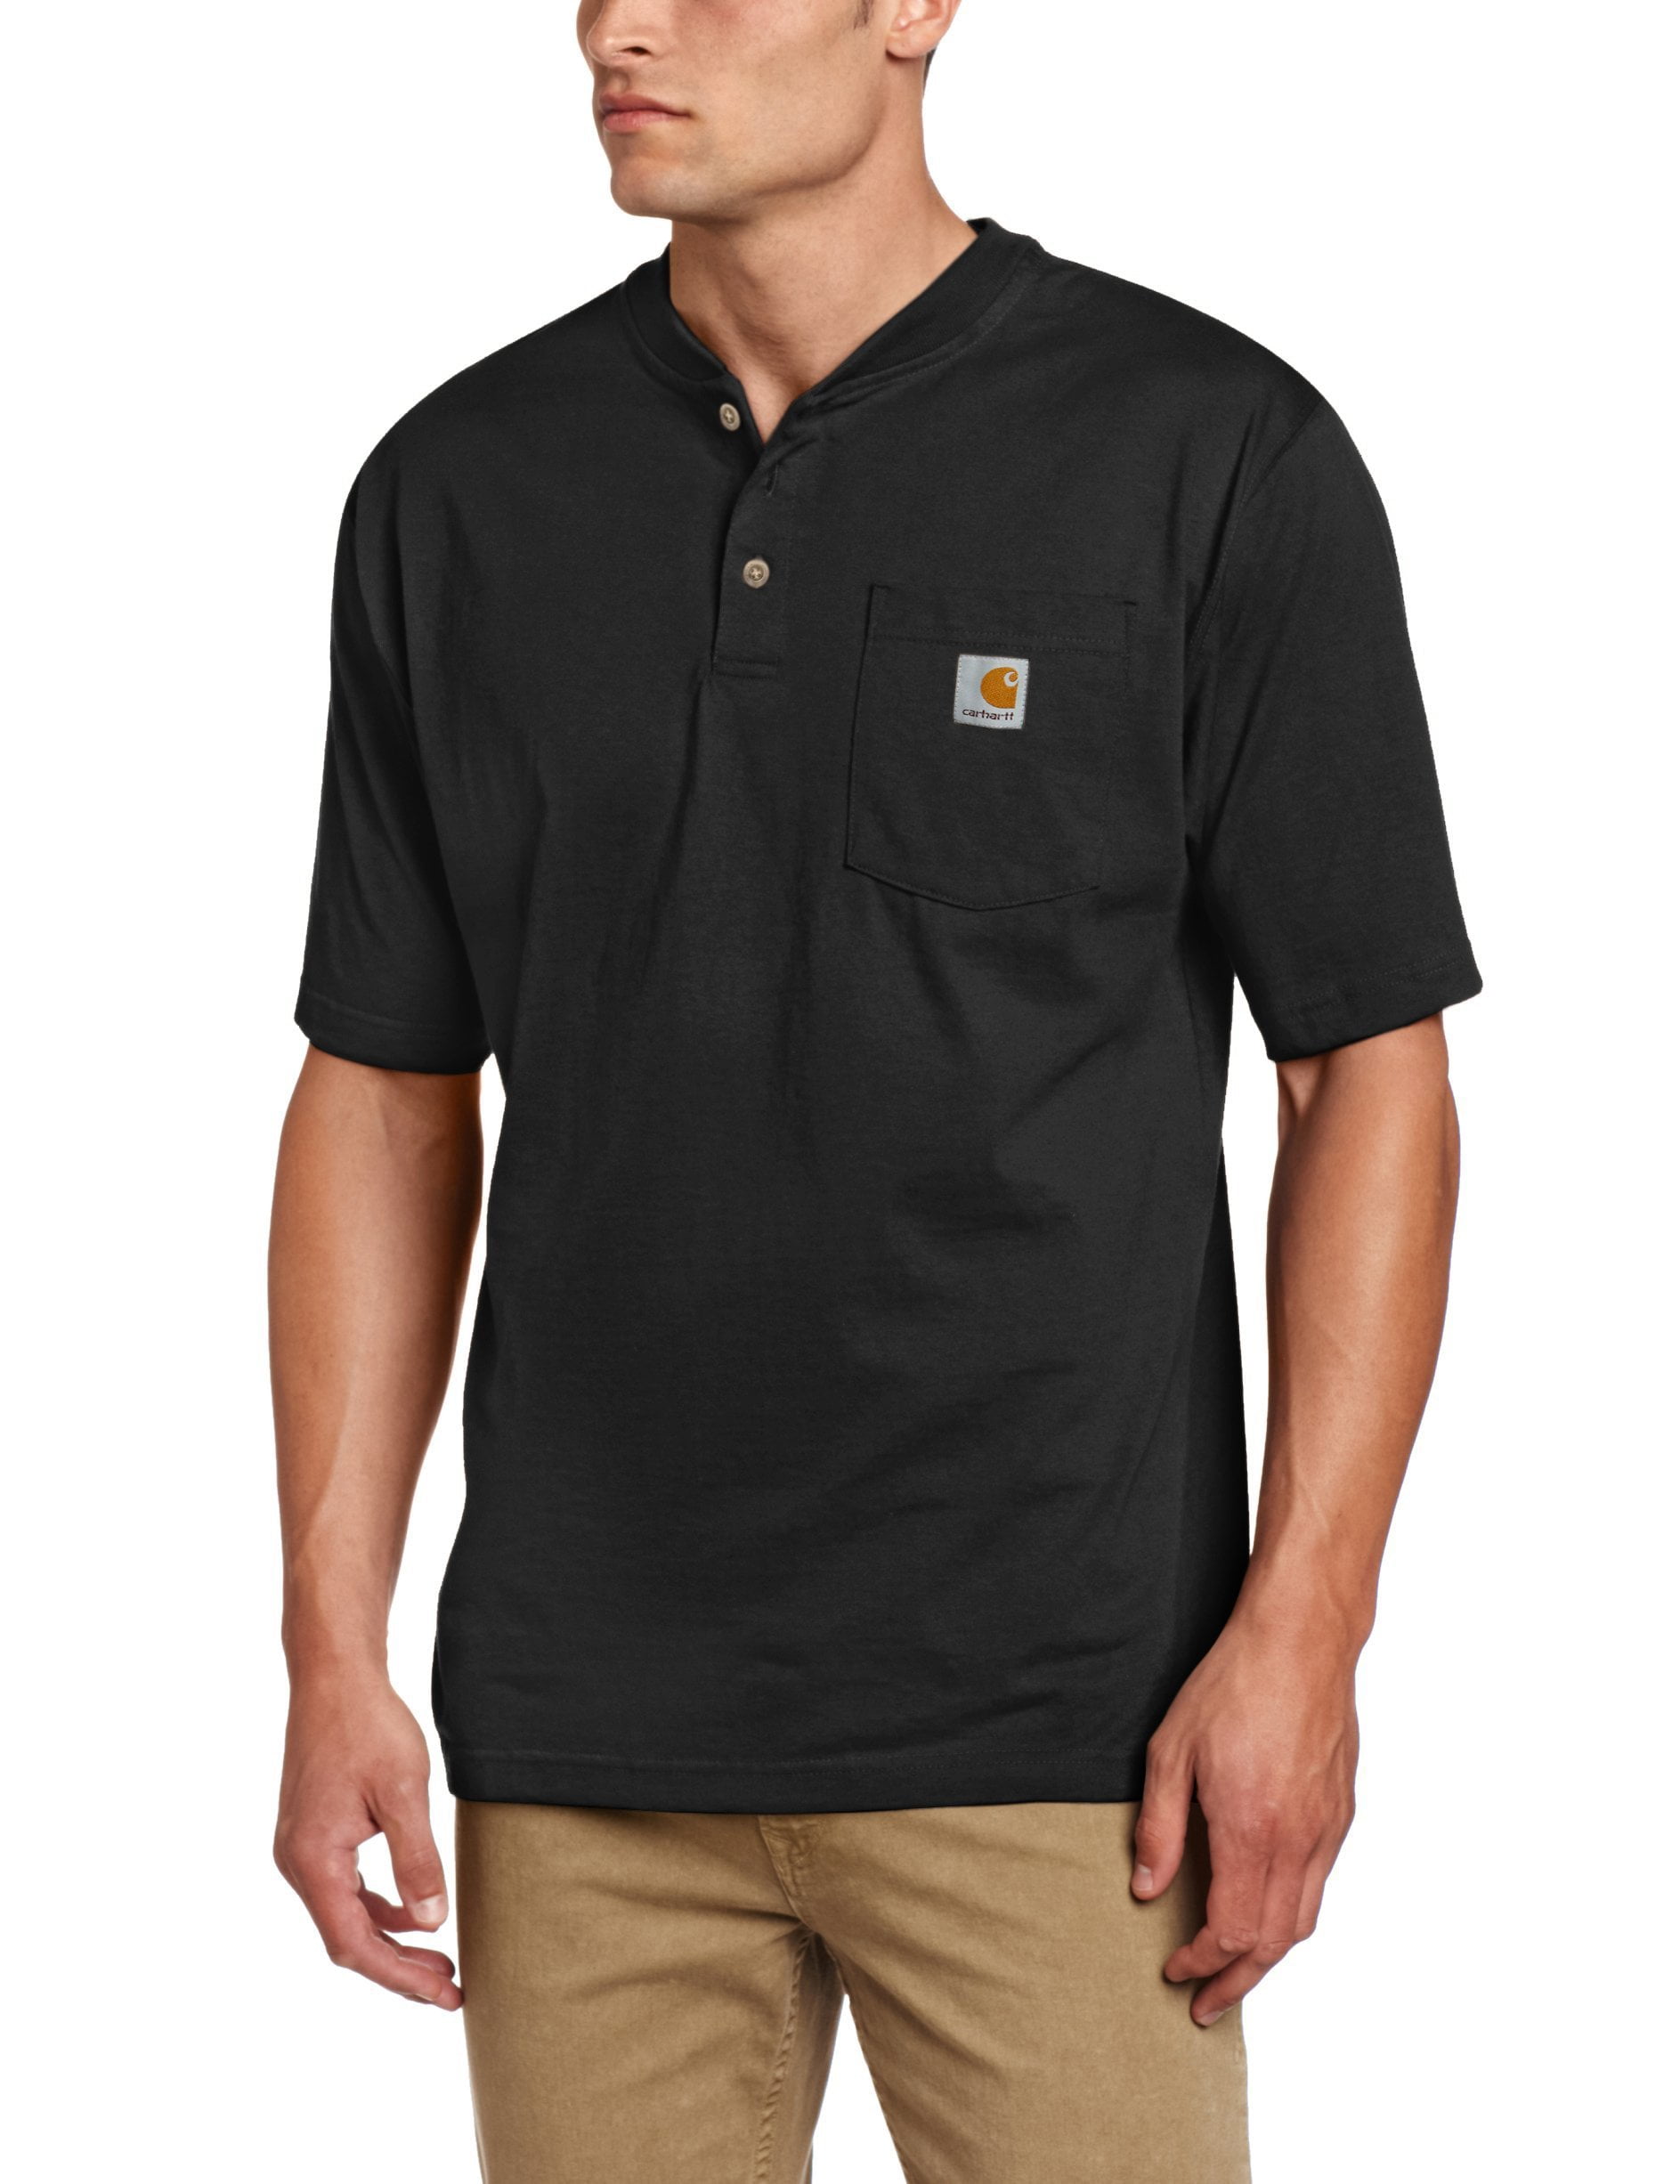 titel Athletic ideologi Carhartt Men's Workwear Pocket Henley Shirt (Regular and Big & Tall Sizes)  Short Sleeve Black 3X-Large Tall - Walmart.com